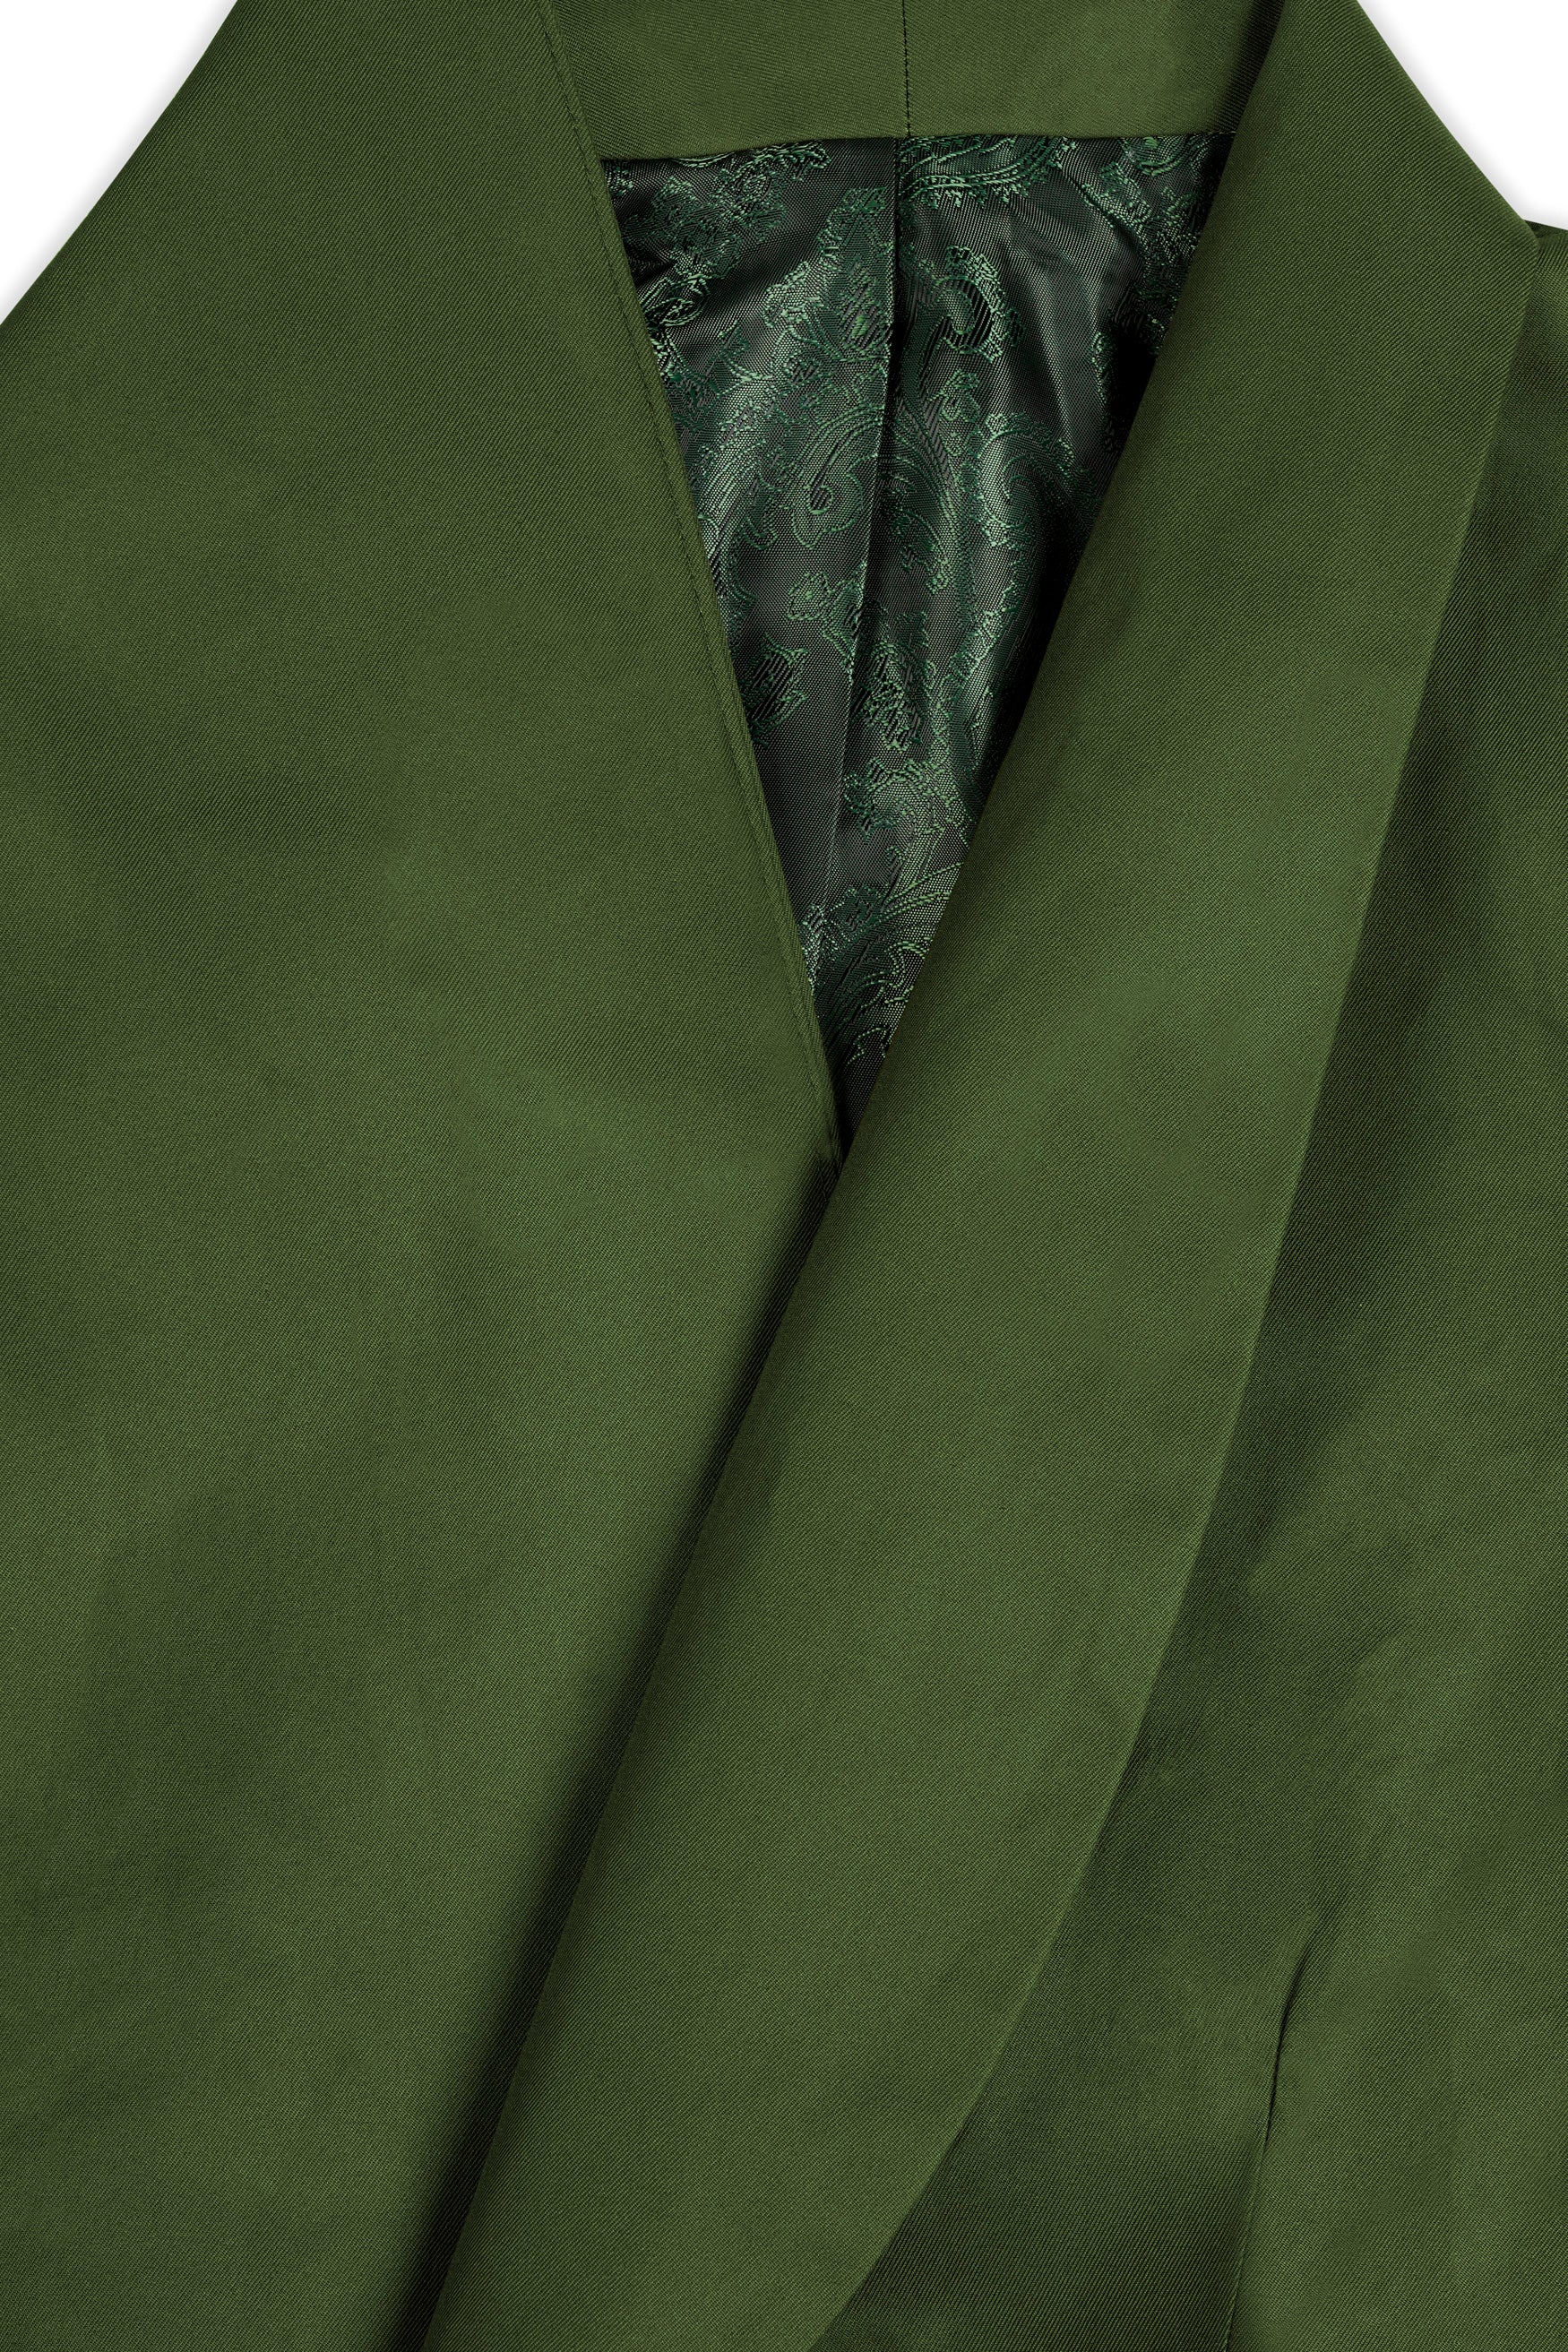 Juniper Green Wool Rich Women’s Designer Tuxedo Suit